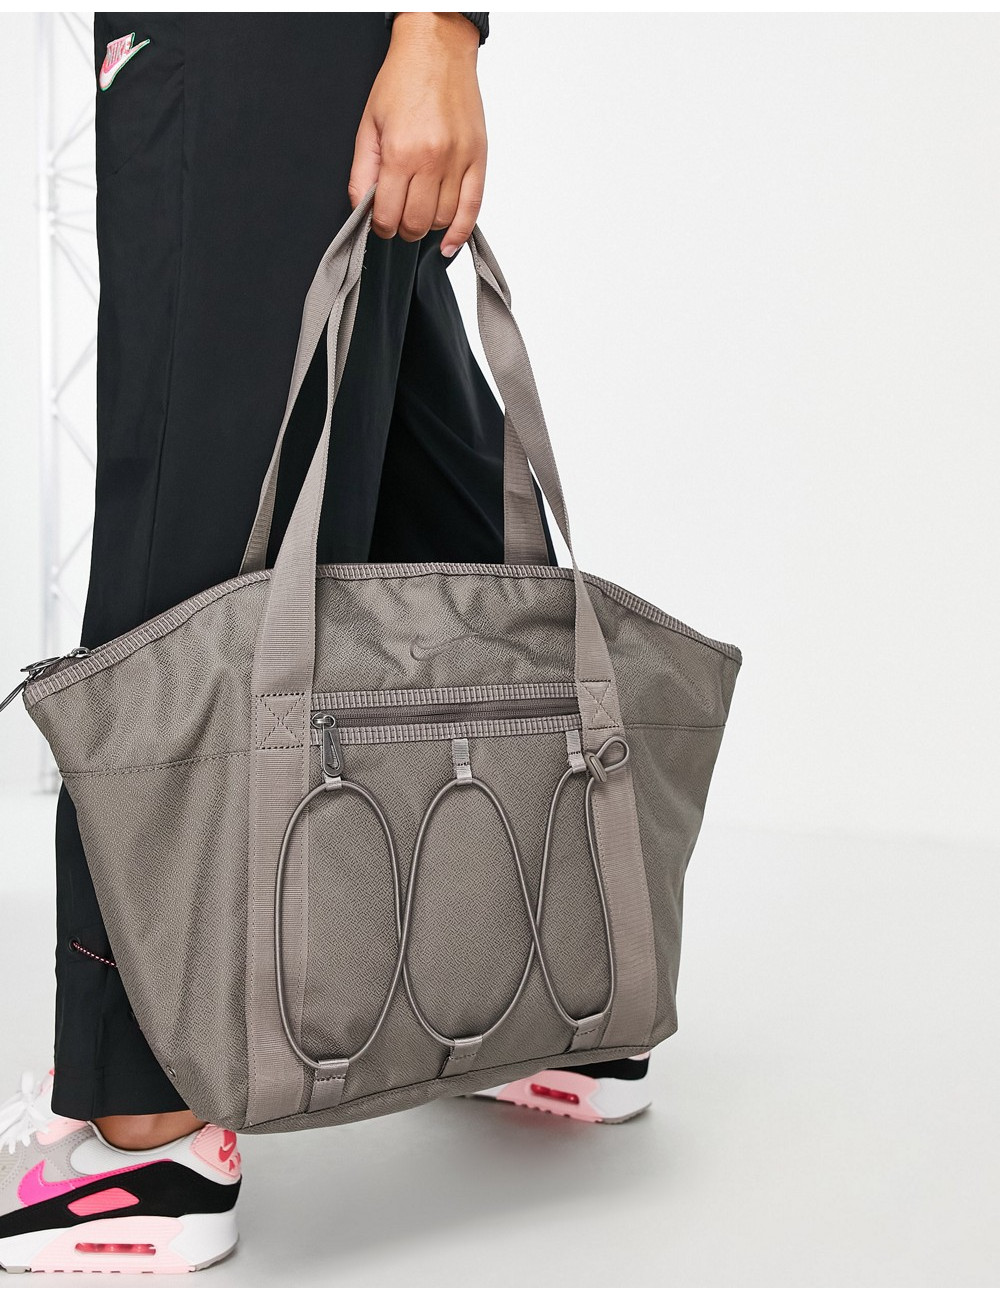 Nike tote shopper bag in grey